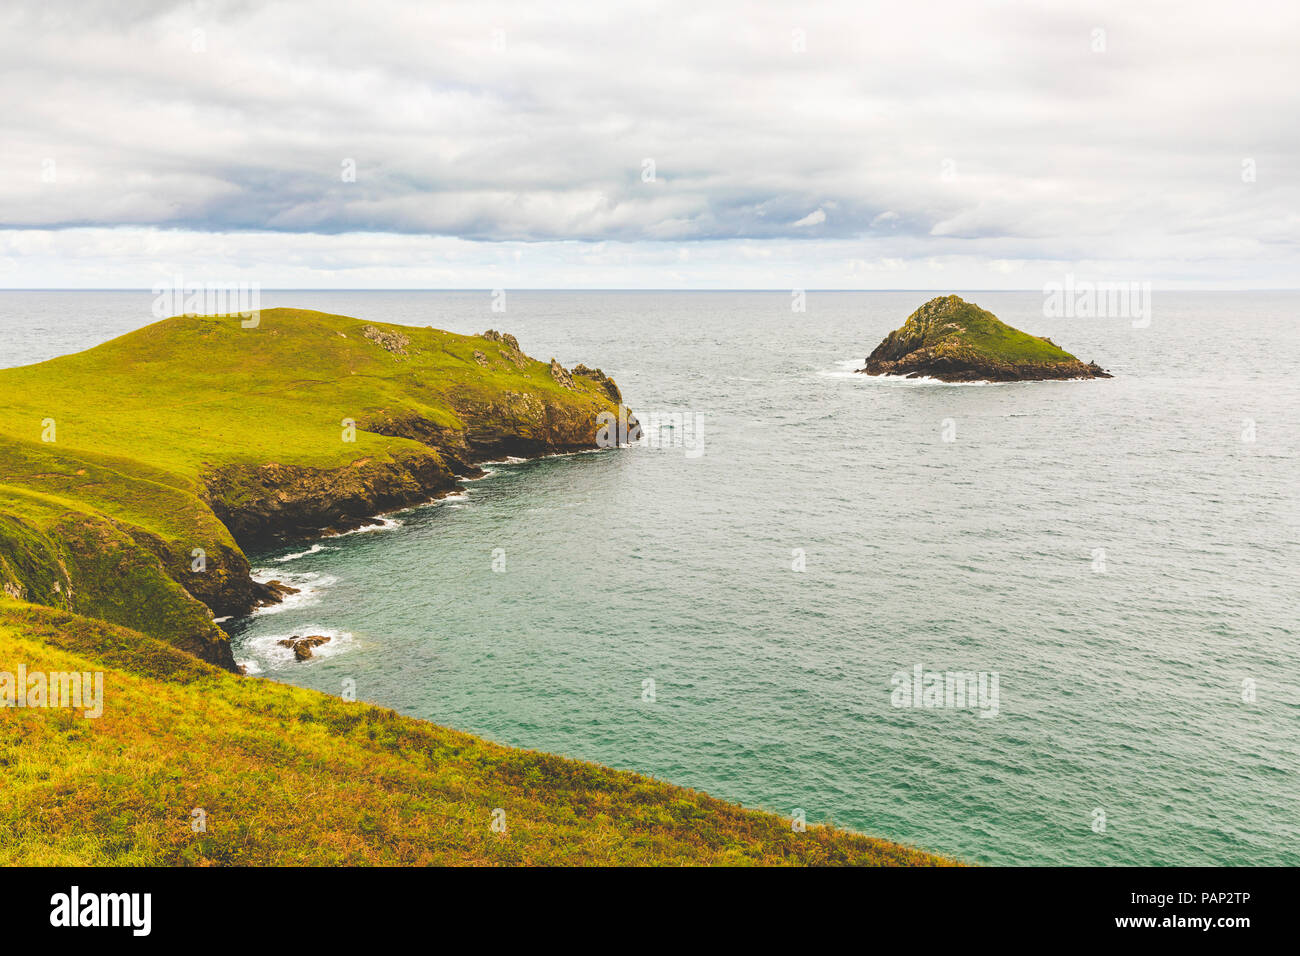 Reino Unido, Cornwall, zona costera las nalgas Foto de stock